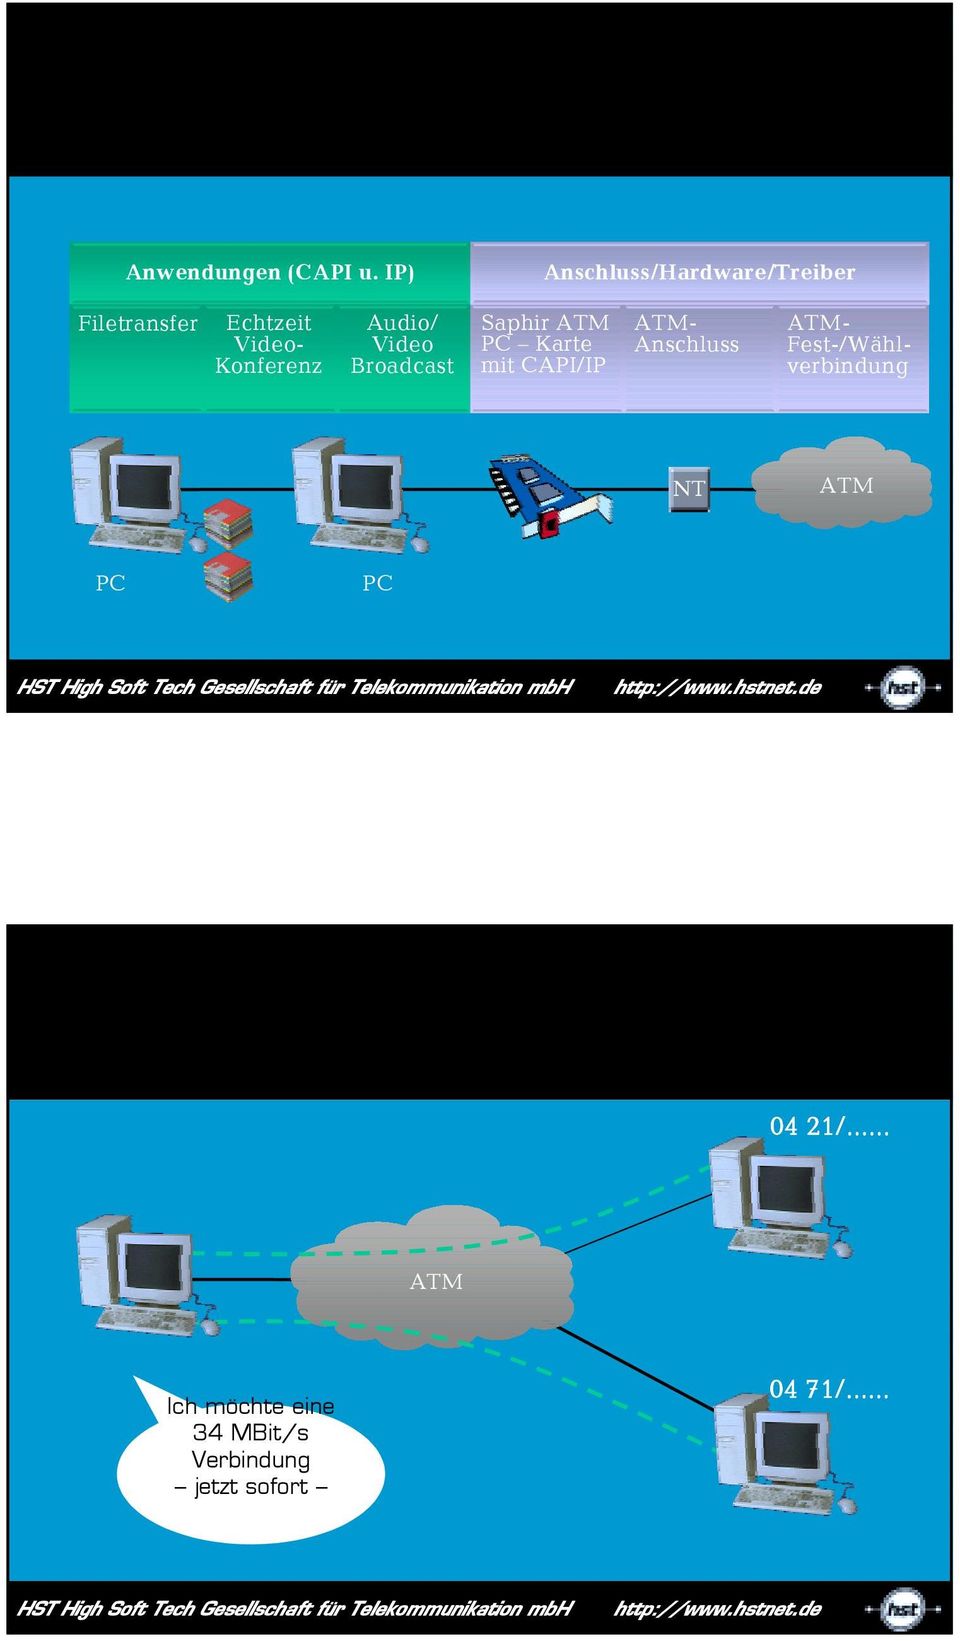 Broadcast Saphir ATM PC Karte mit CAPI/IP ATM- Fest-/Wählverbindung ATM- Anschluss